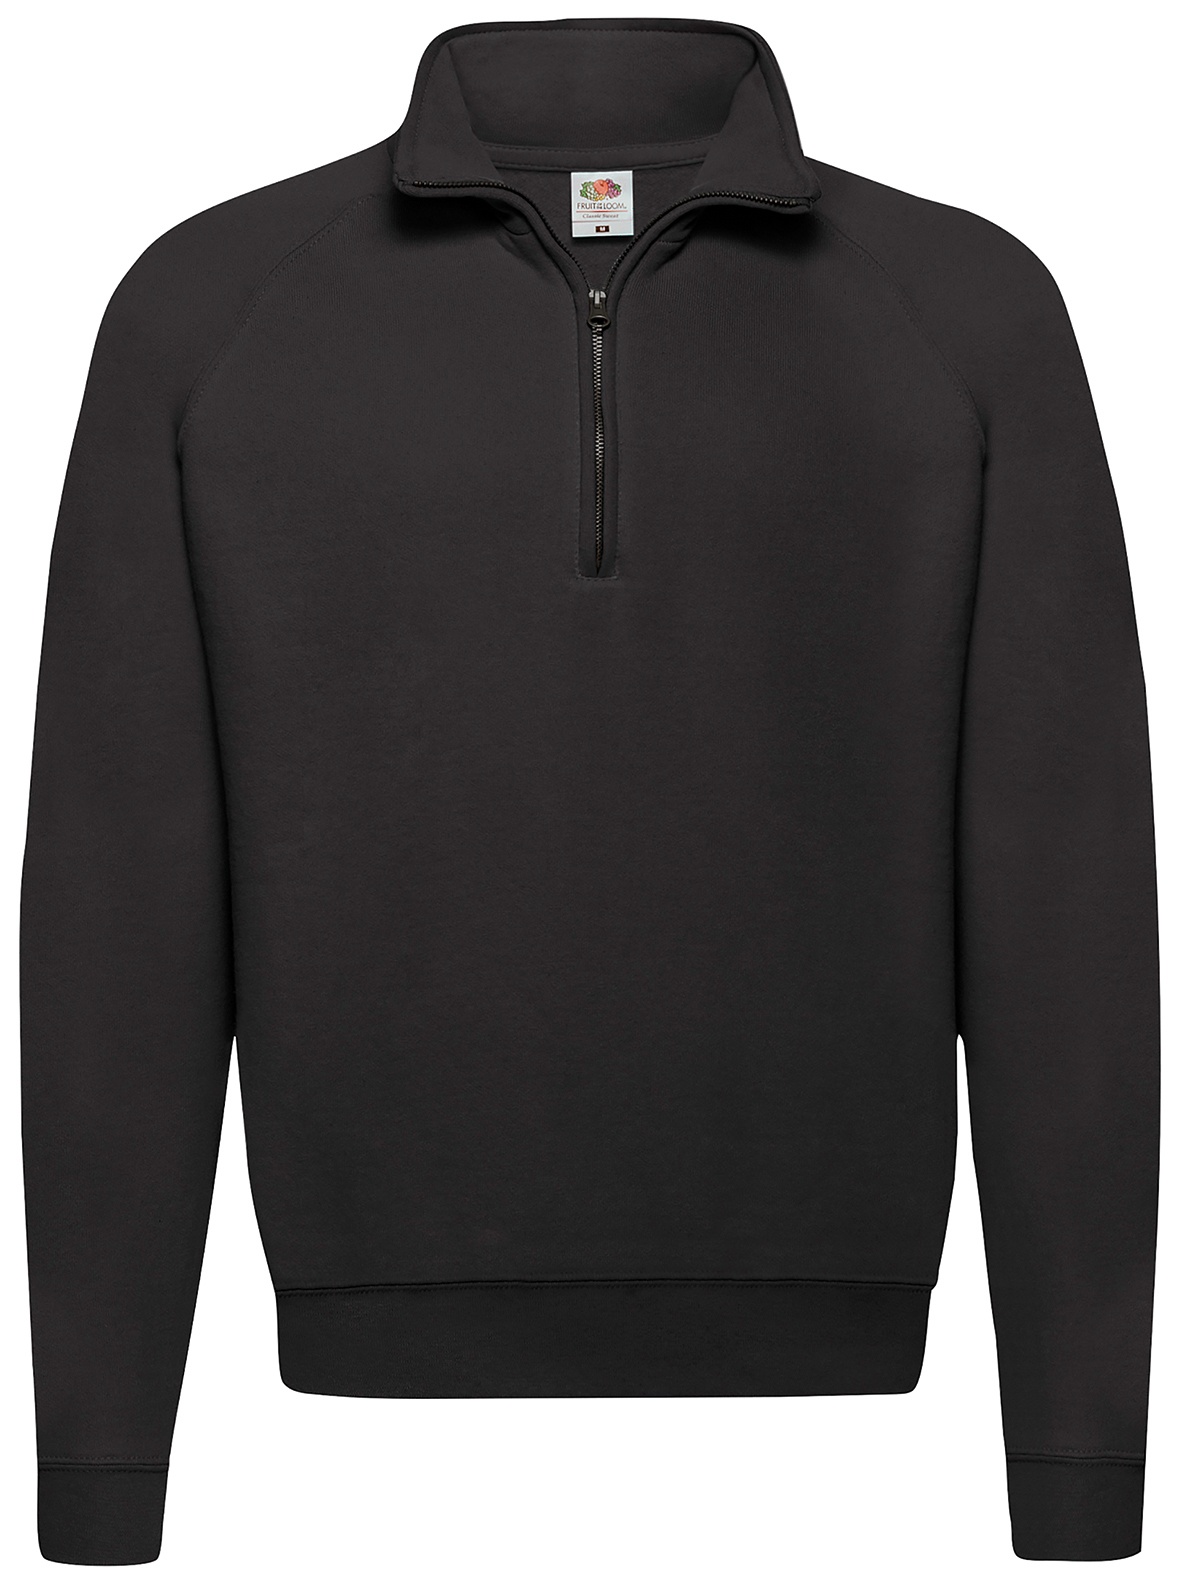 CLASSIC ZIP NECK SWEAT - Herren Sweatshirt mit Reißverschluss, schwarz, L